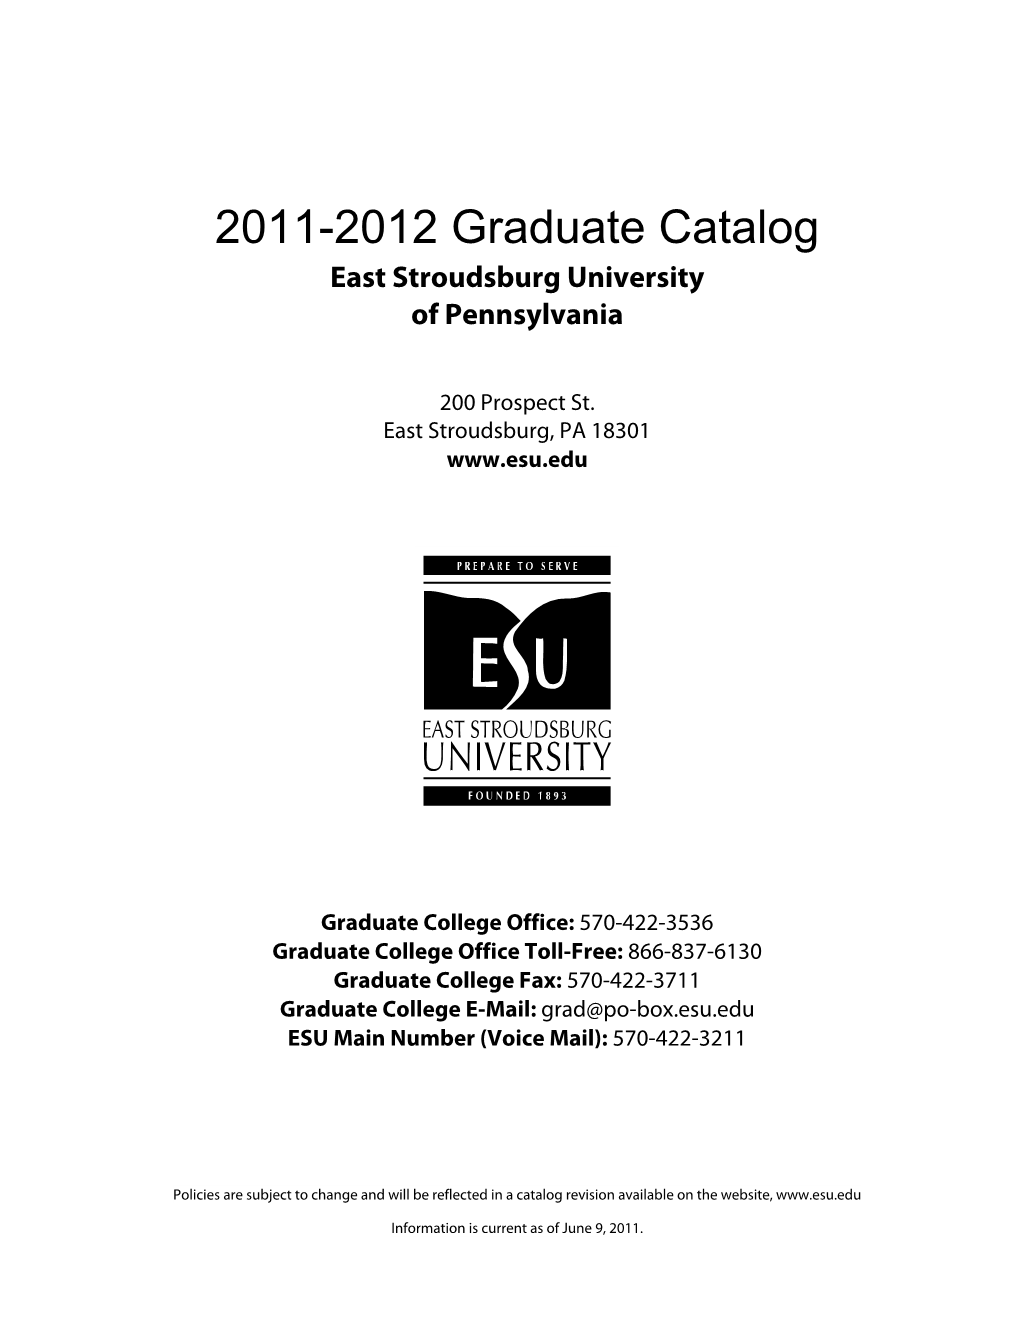 2011-2012 Graduate Catalog East Stroudsburg University of Pennsylvania